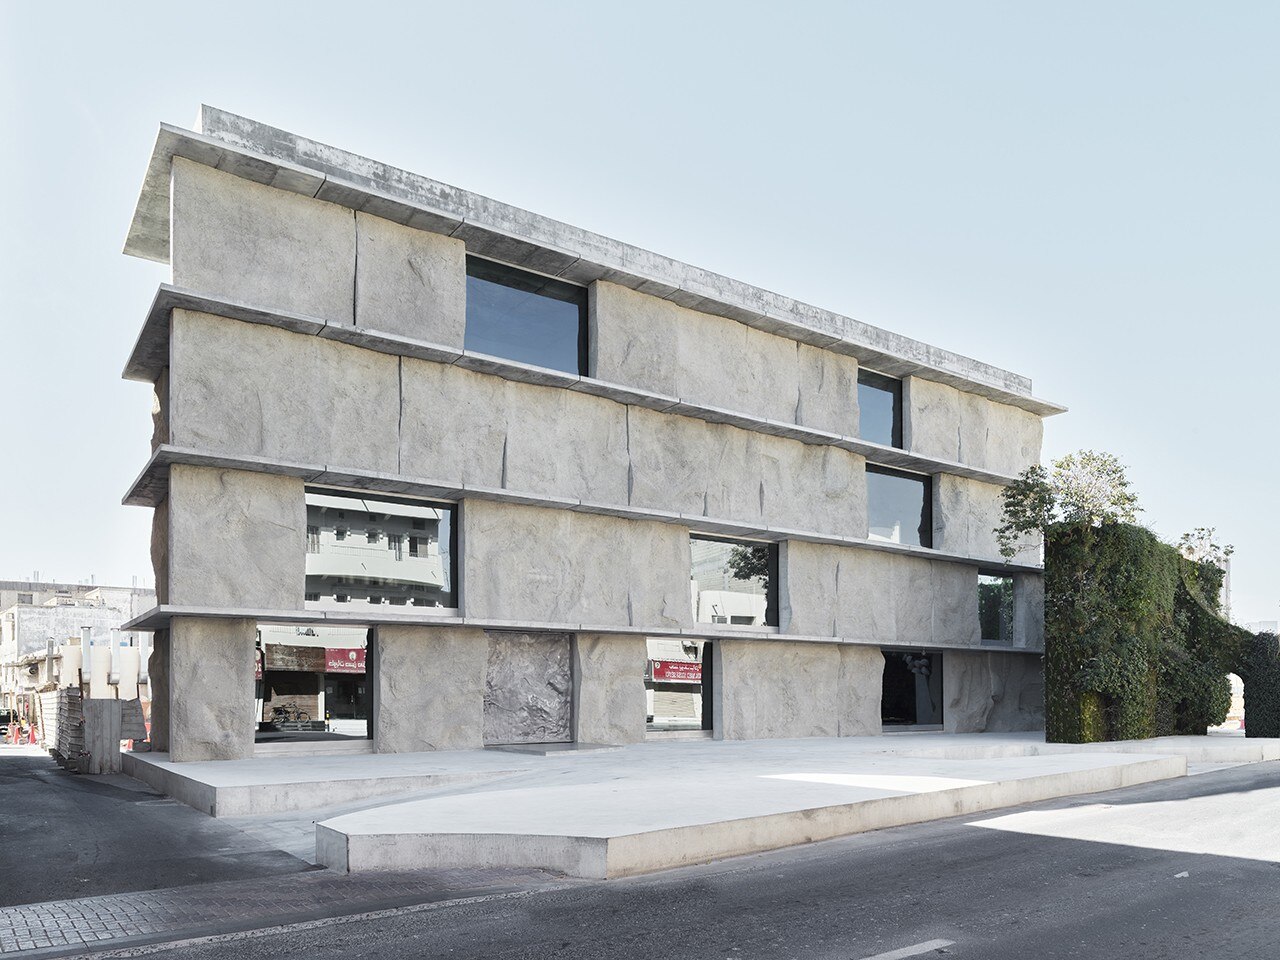 Studio Anne Holtrop designs a site-specific facade in Bahrain - Domus